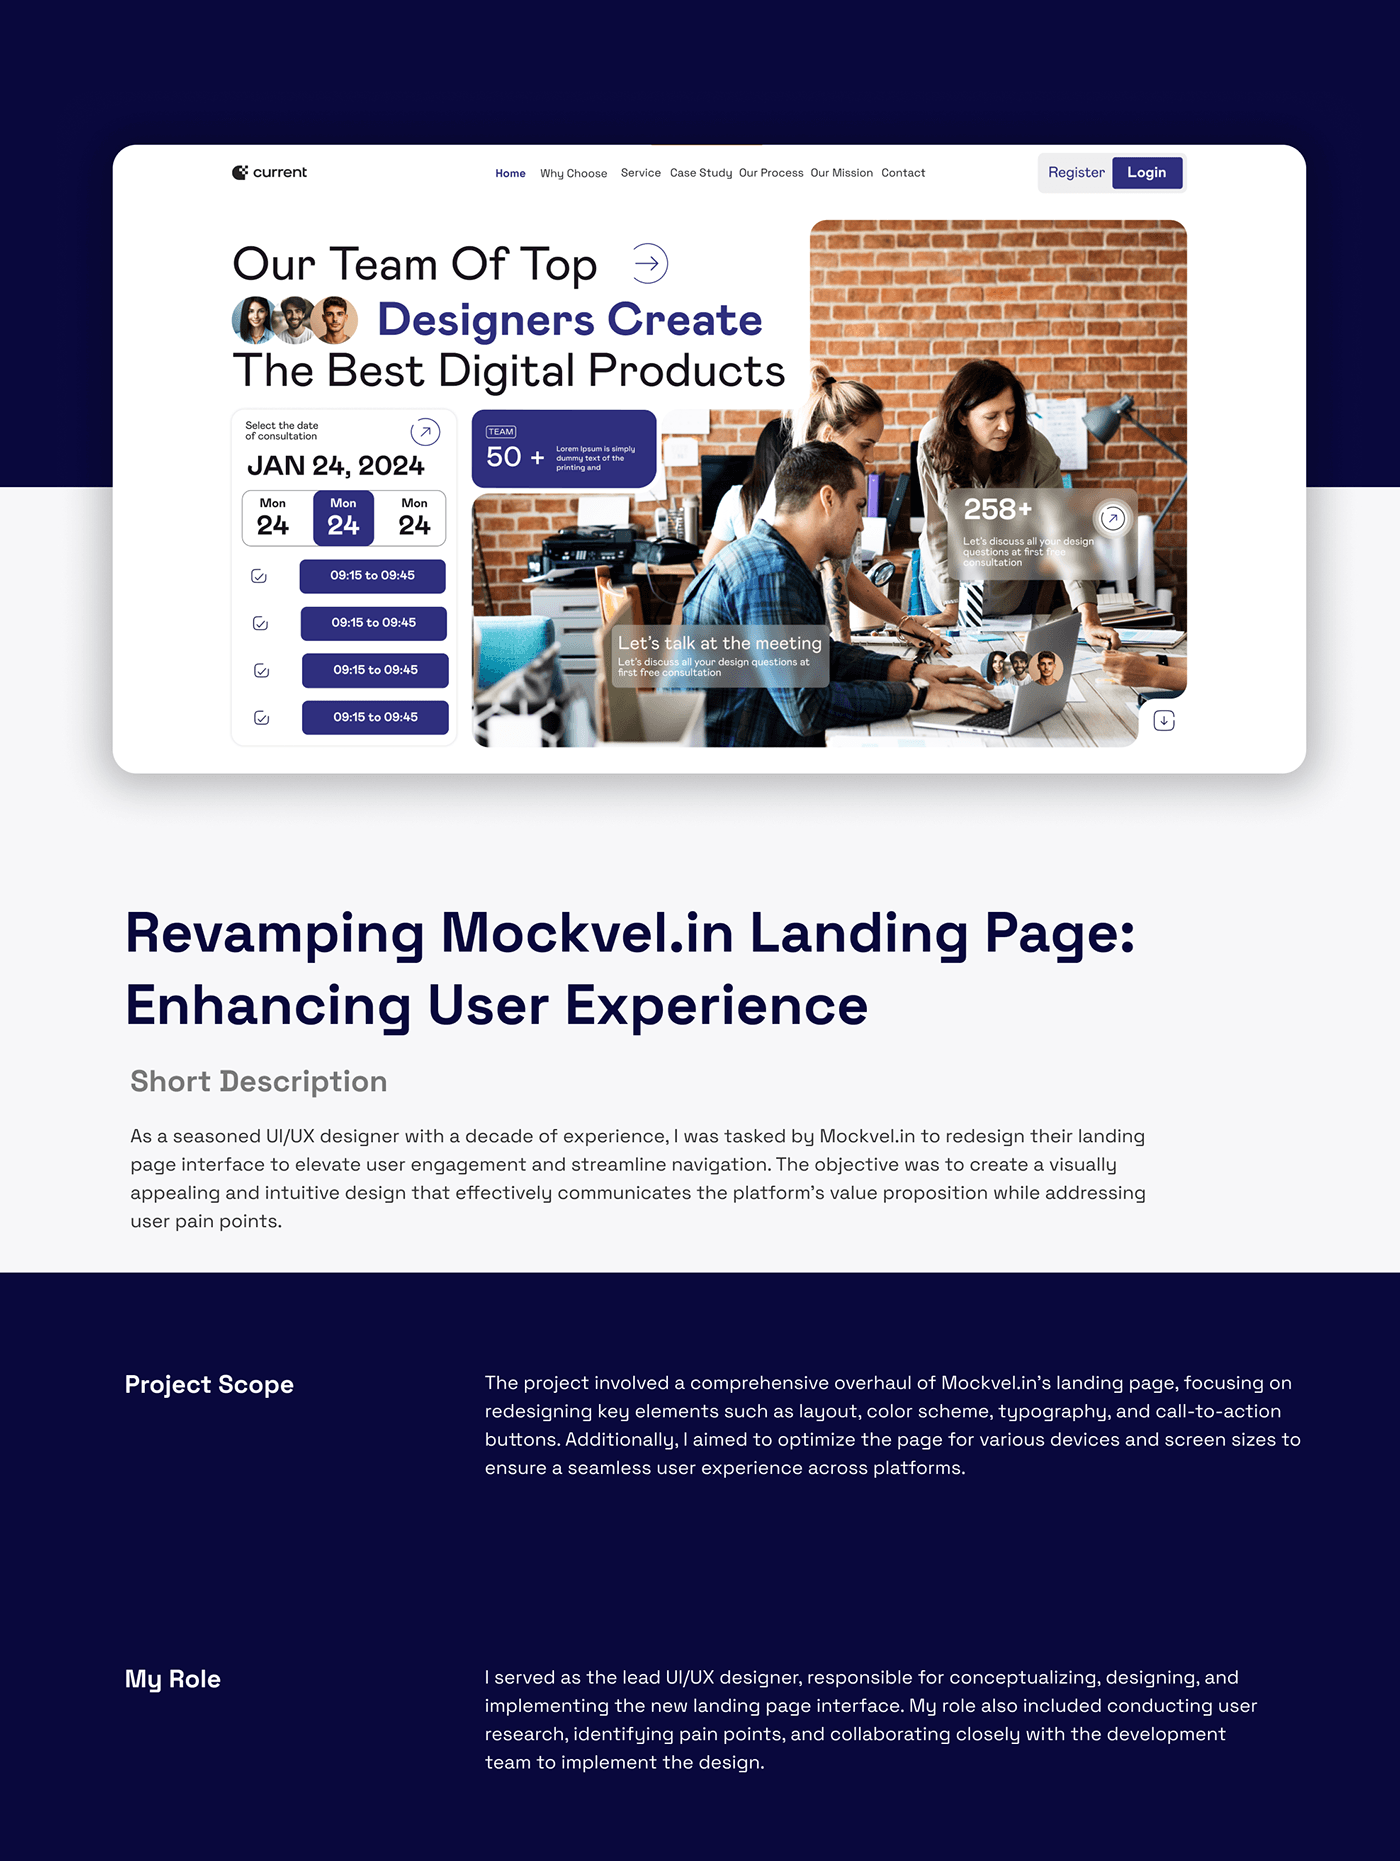 "Sleek website layout for a creative agency"
